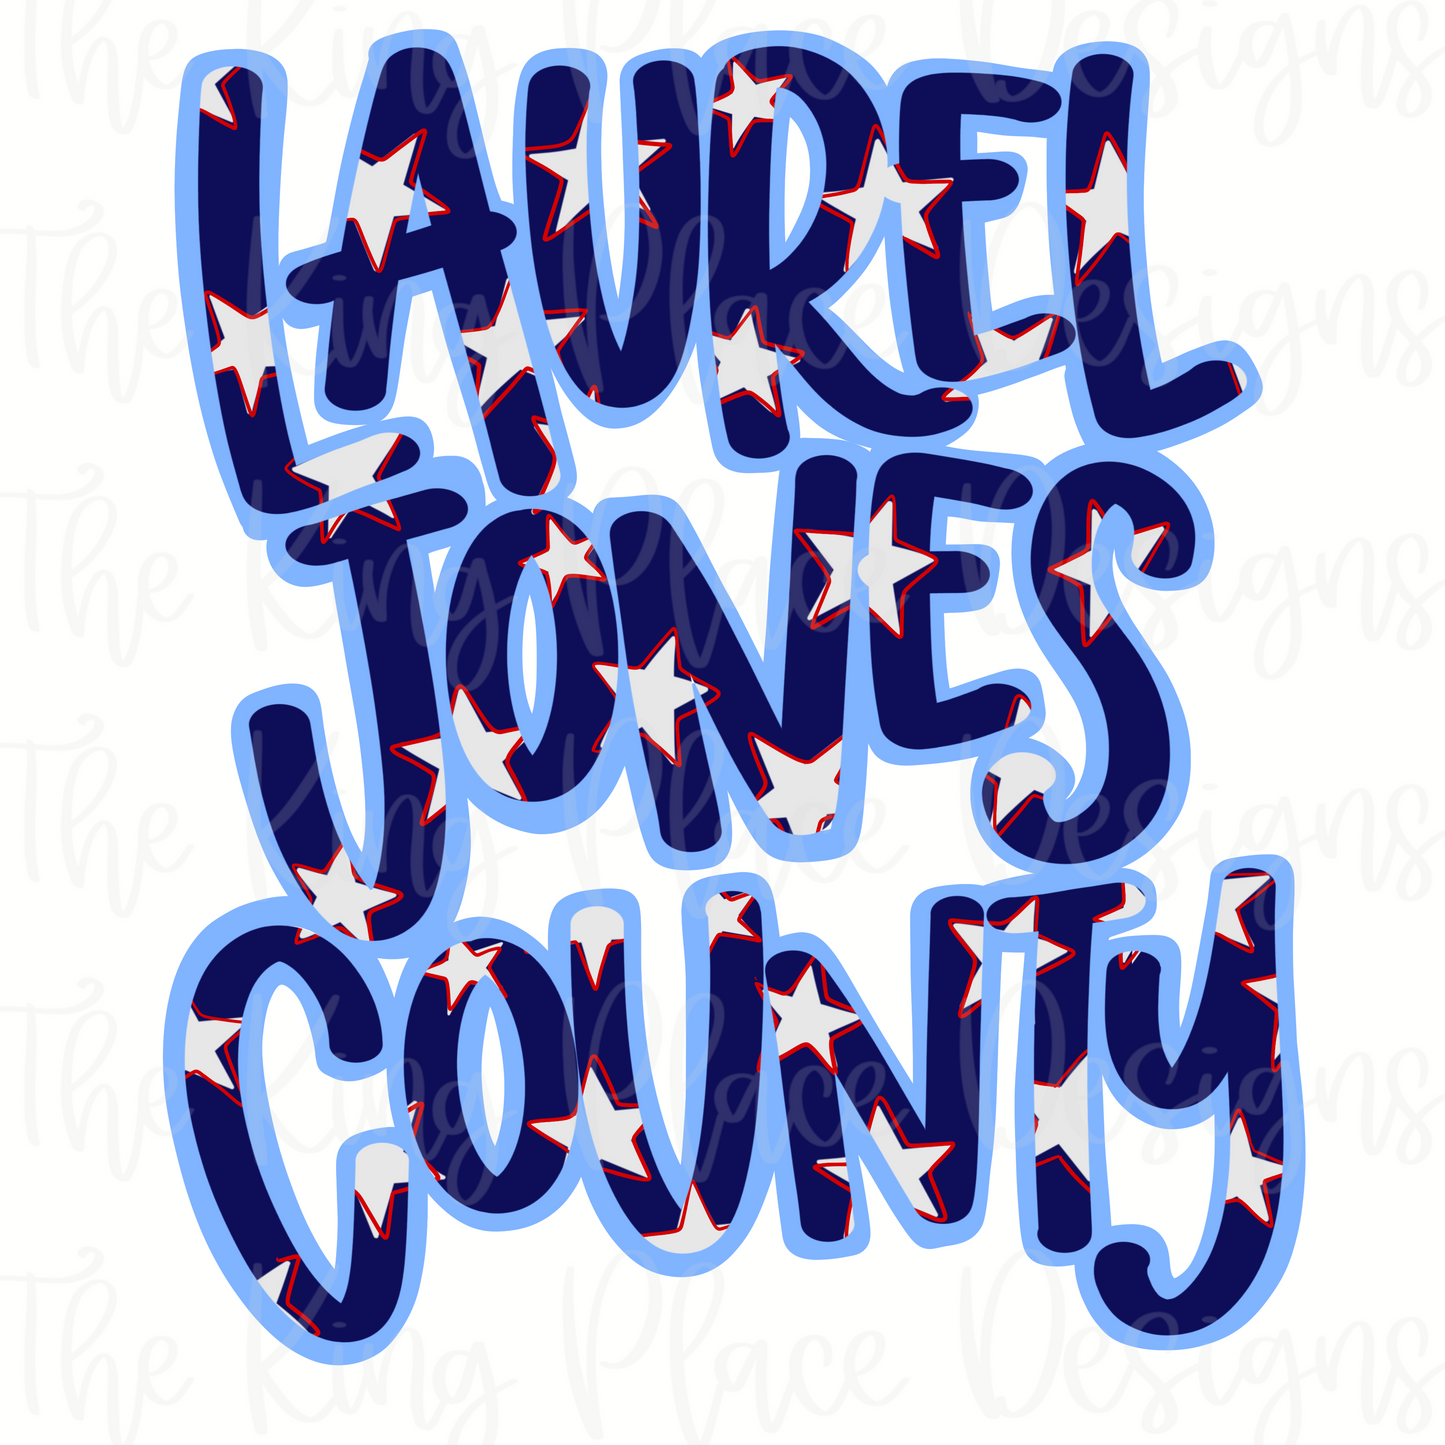 Laurel Jones County All-Stars